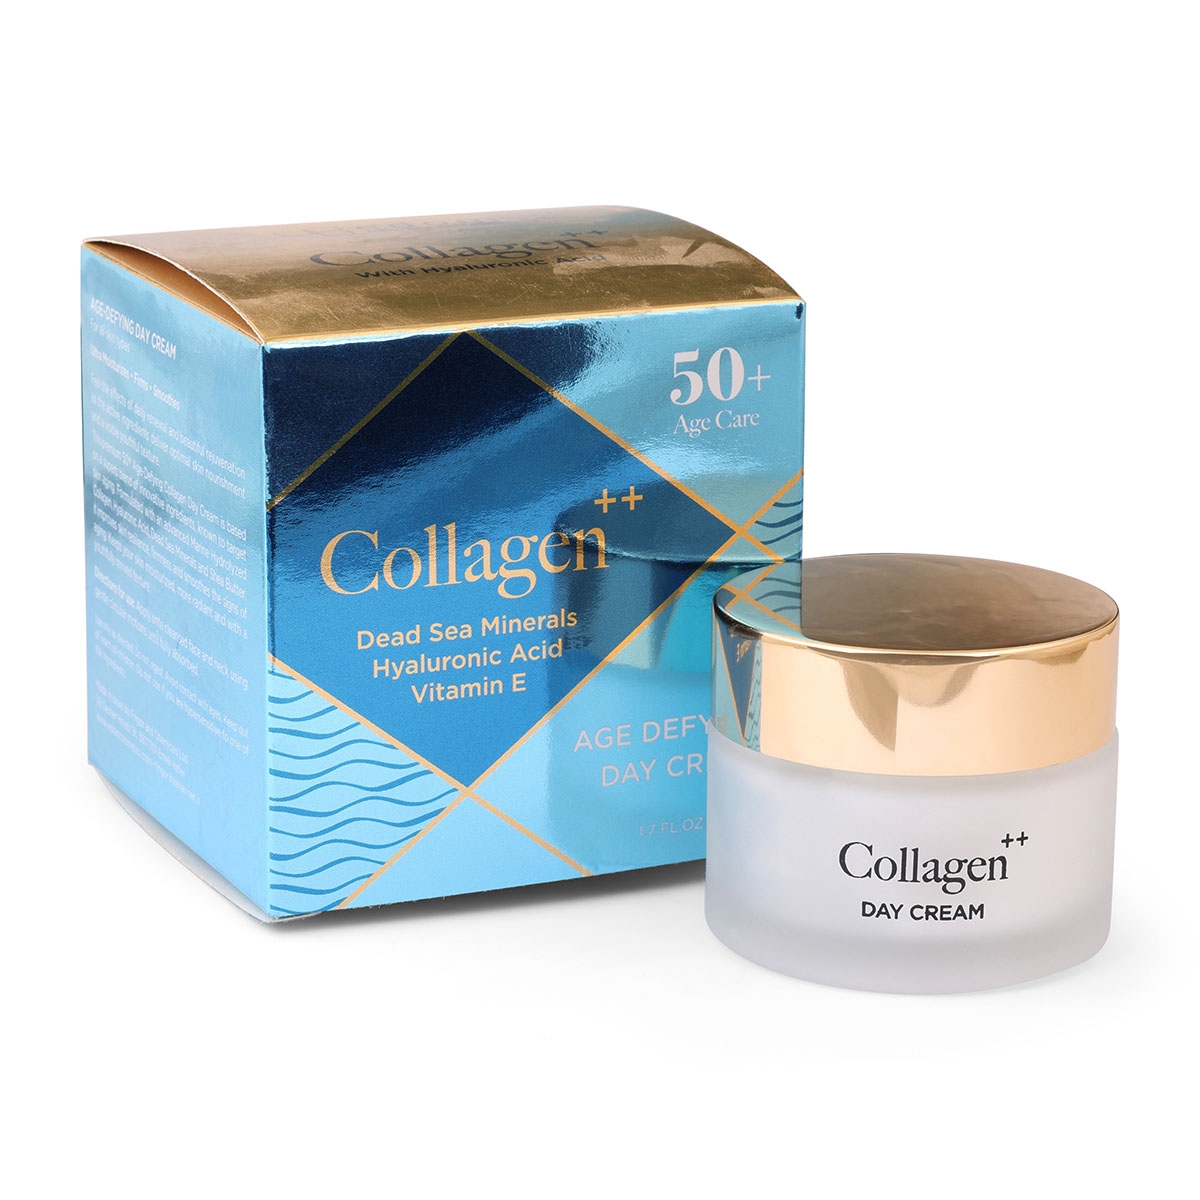 Edom Cosmetics Collagen Age-Defying Day Cream (50+) - 1